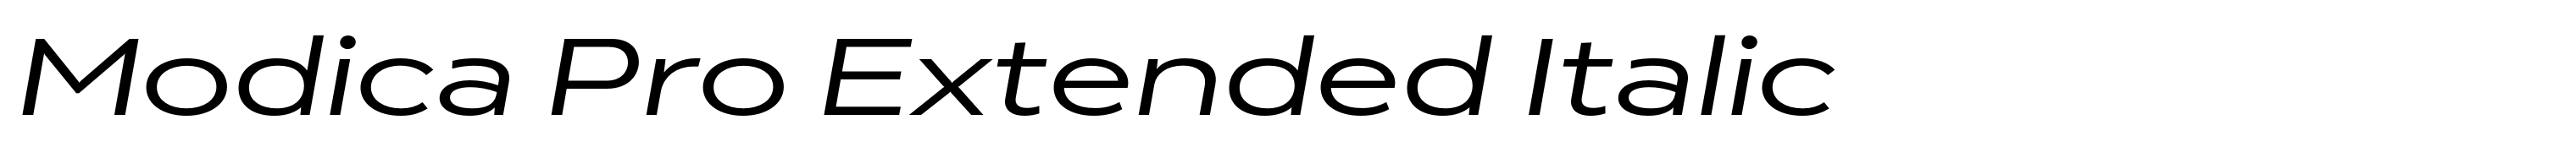 Modica Pro Extended Italic